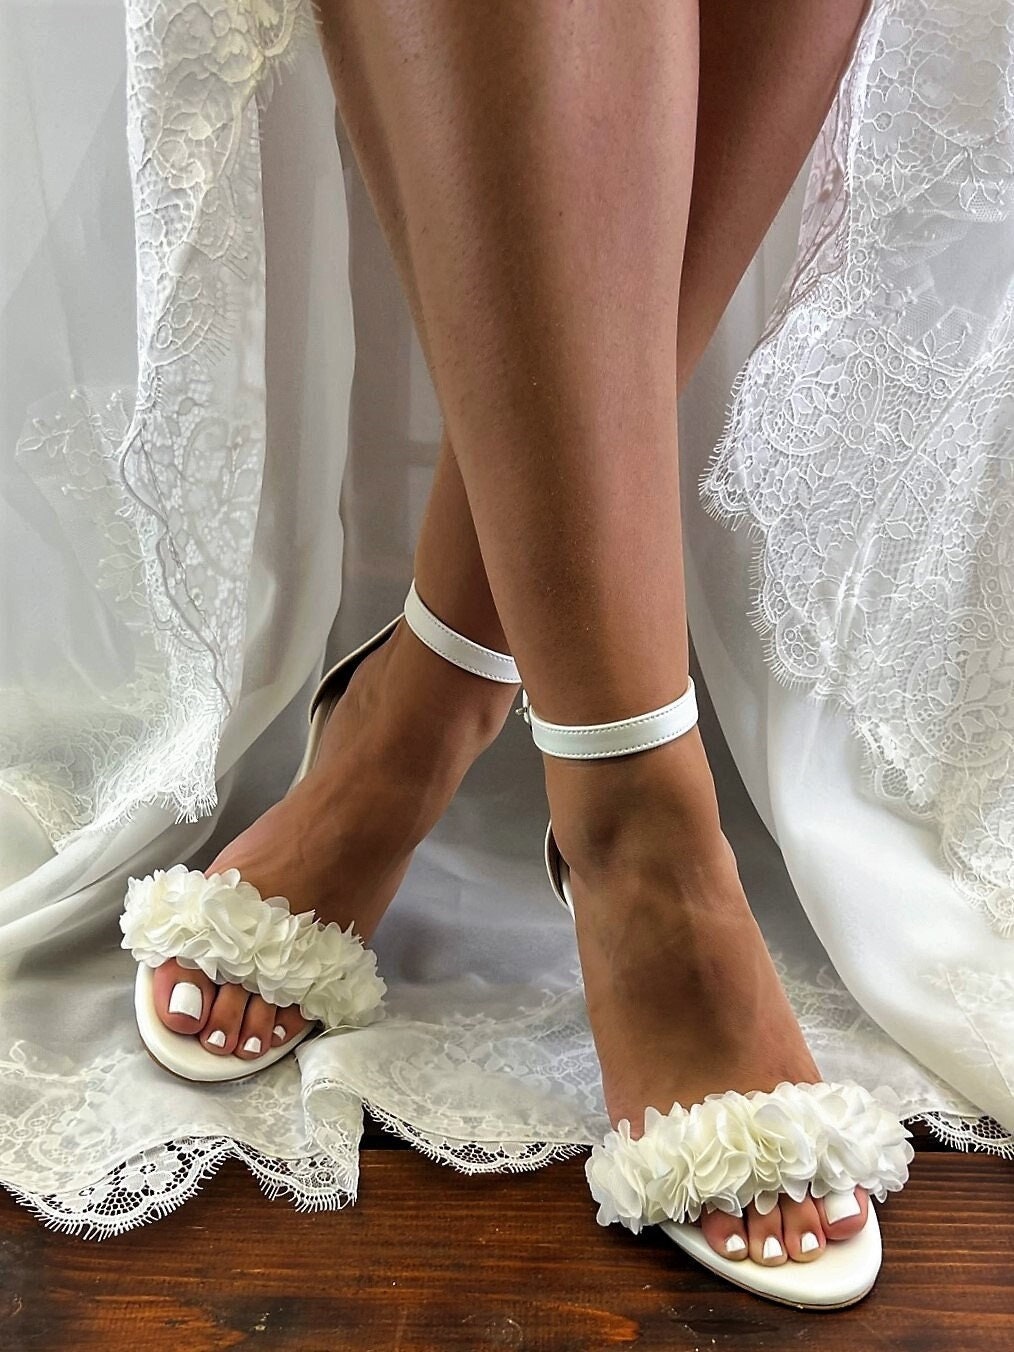 Bling Gems Wedding shoes Bridal bridesmaids flats low high heel pump wedge  5-12 | eBay